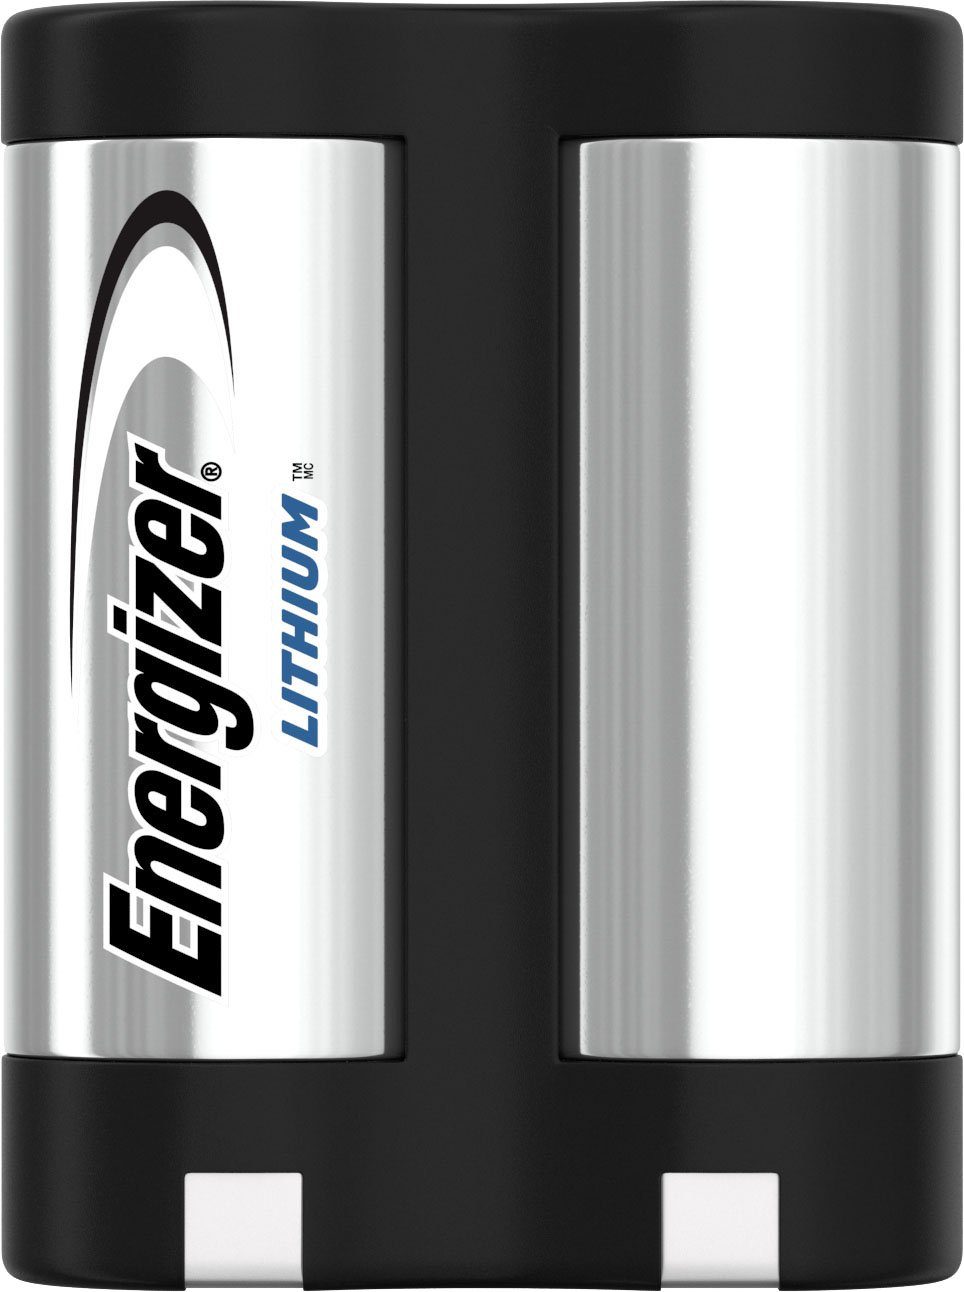 Energizer 1 Stck Lithium V, St) 2CR5 (6 Foto 1 Batterie